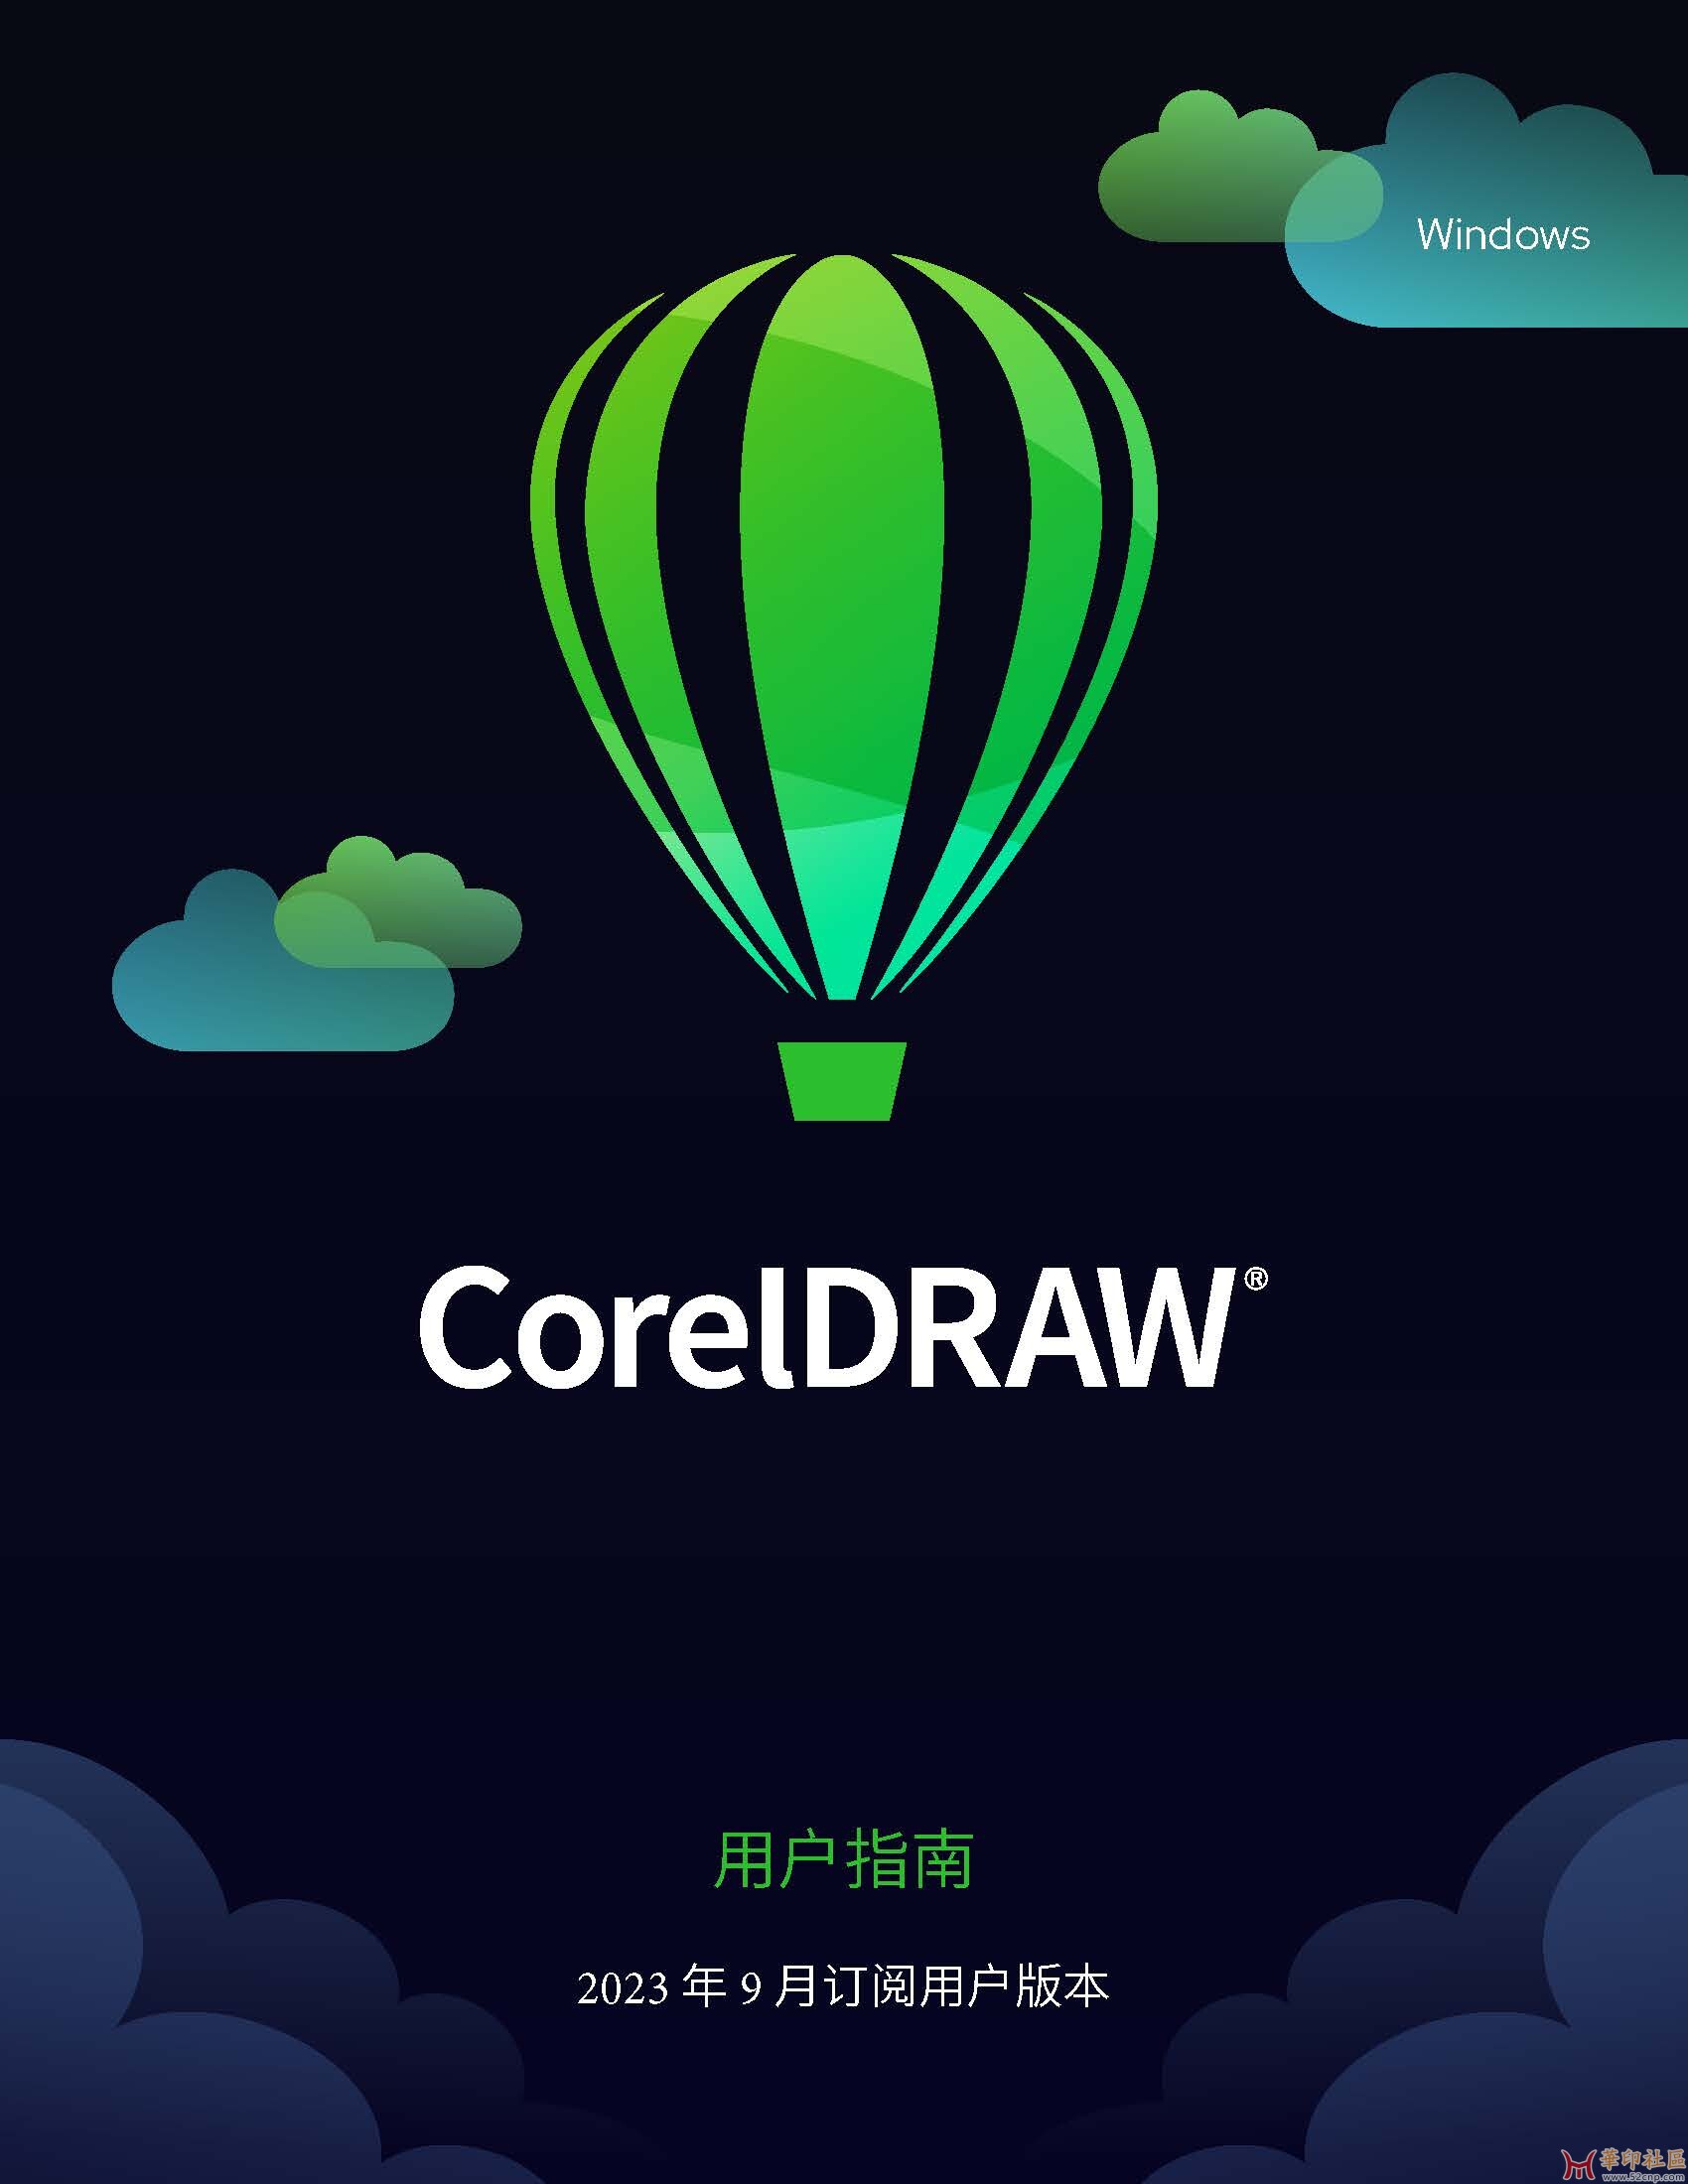 CorelDRAW用户指南_2023年9月发布版！{tag}(1)